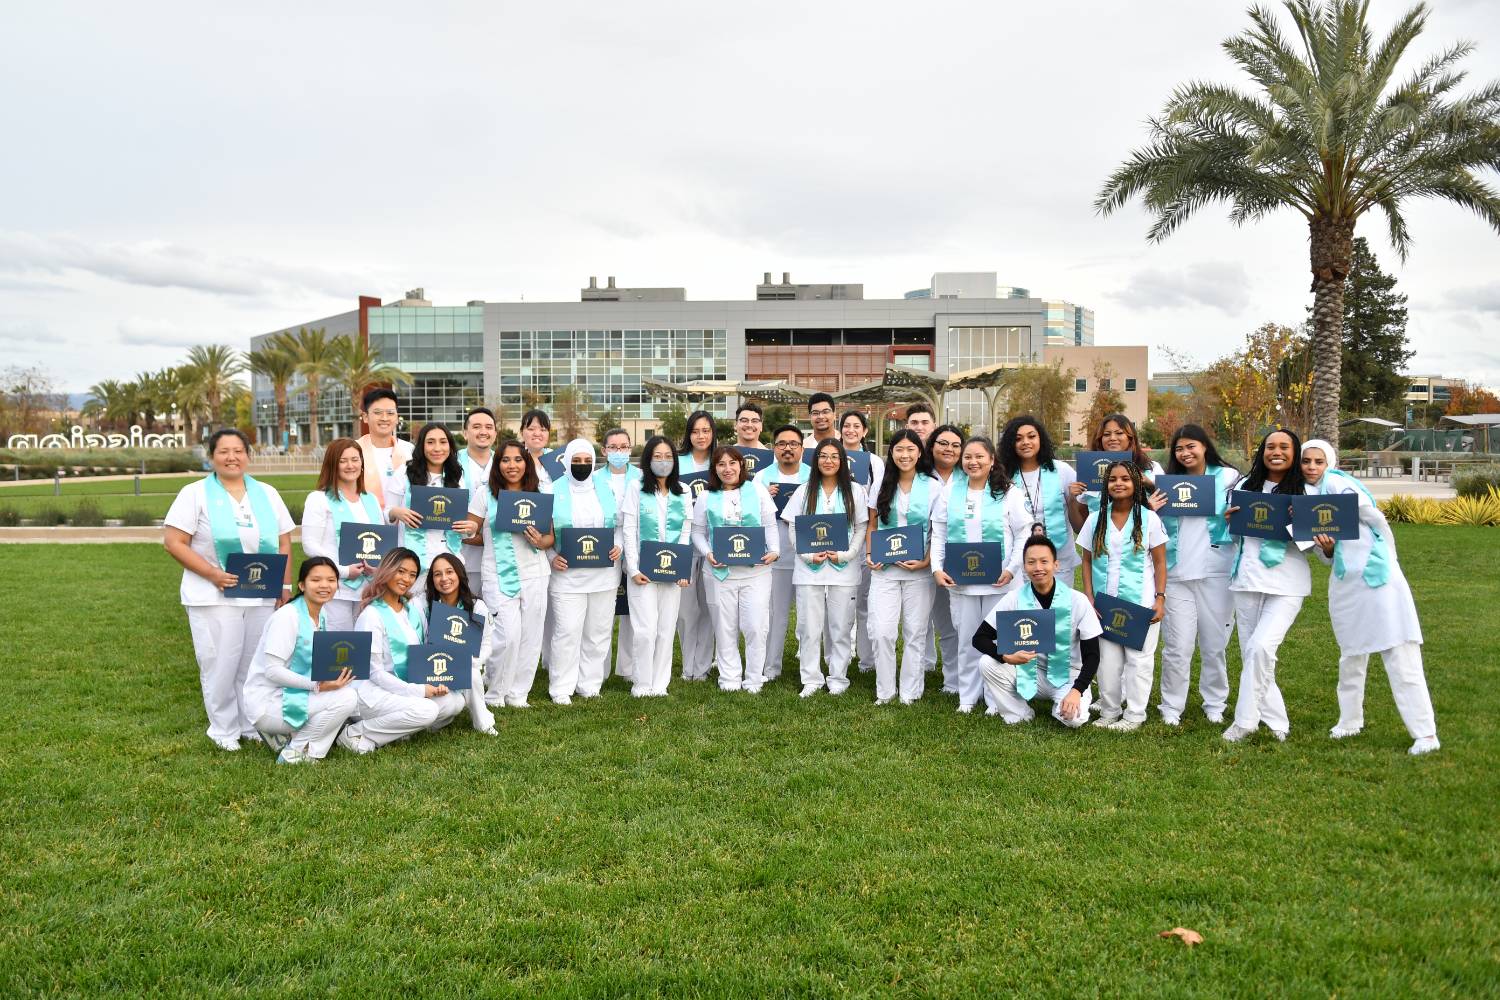 Mission College nursing assistant graduates 